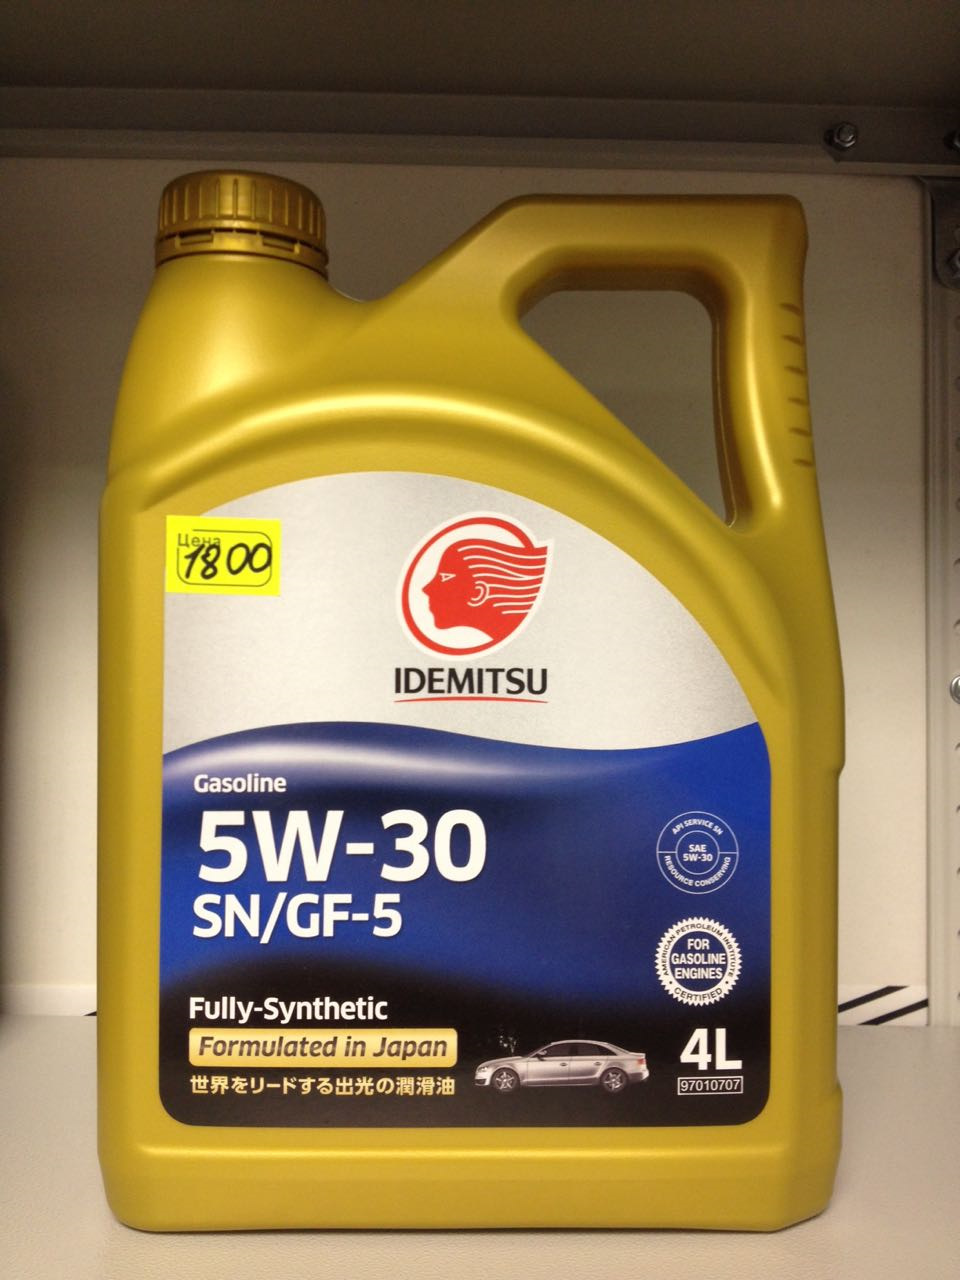 IDEMITSU 5W30 SN/GF-5 как синтетический продукт с присадками и .